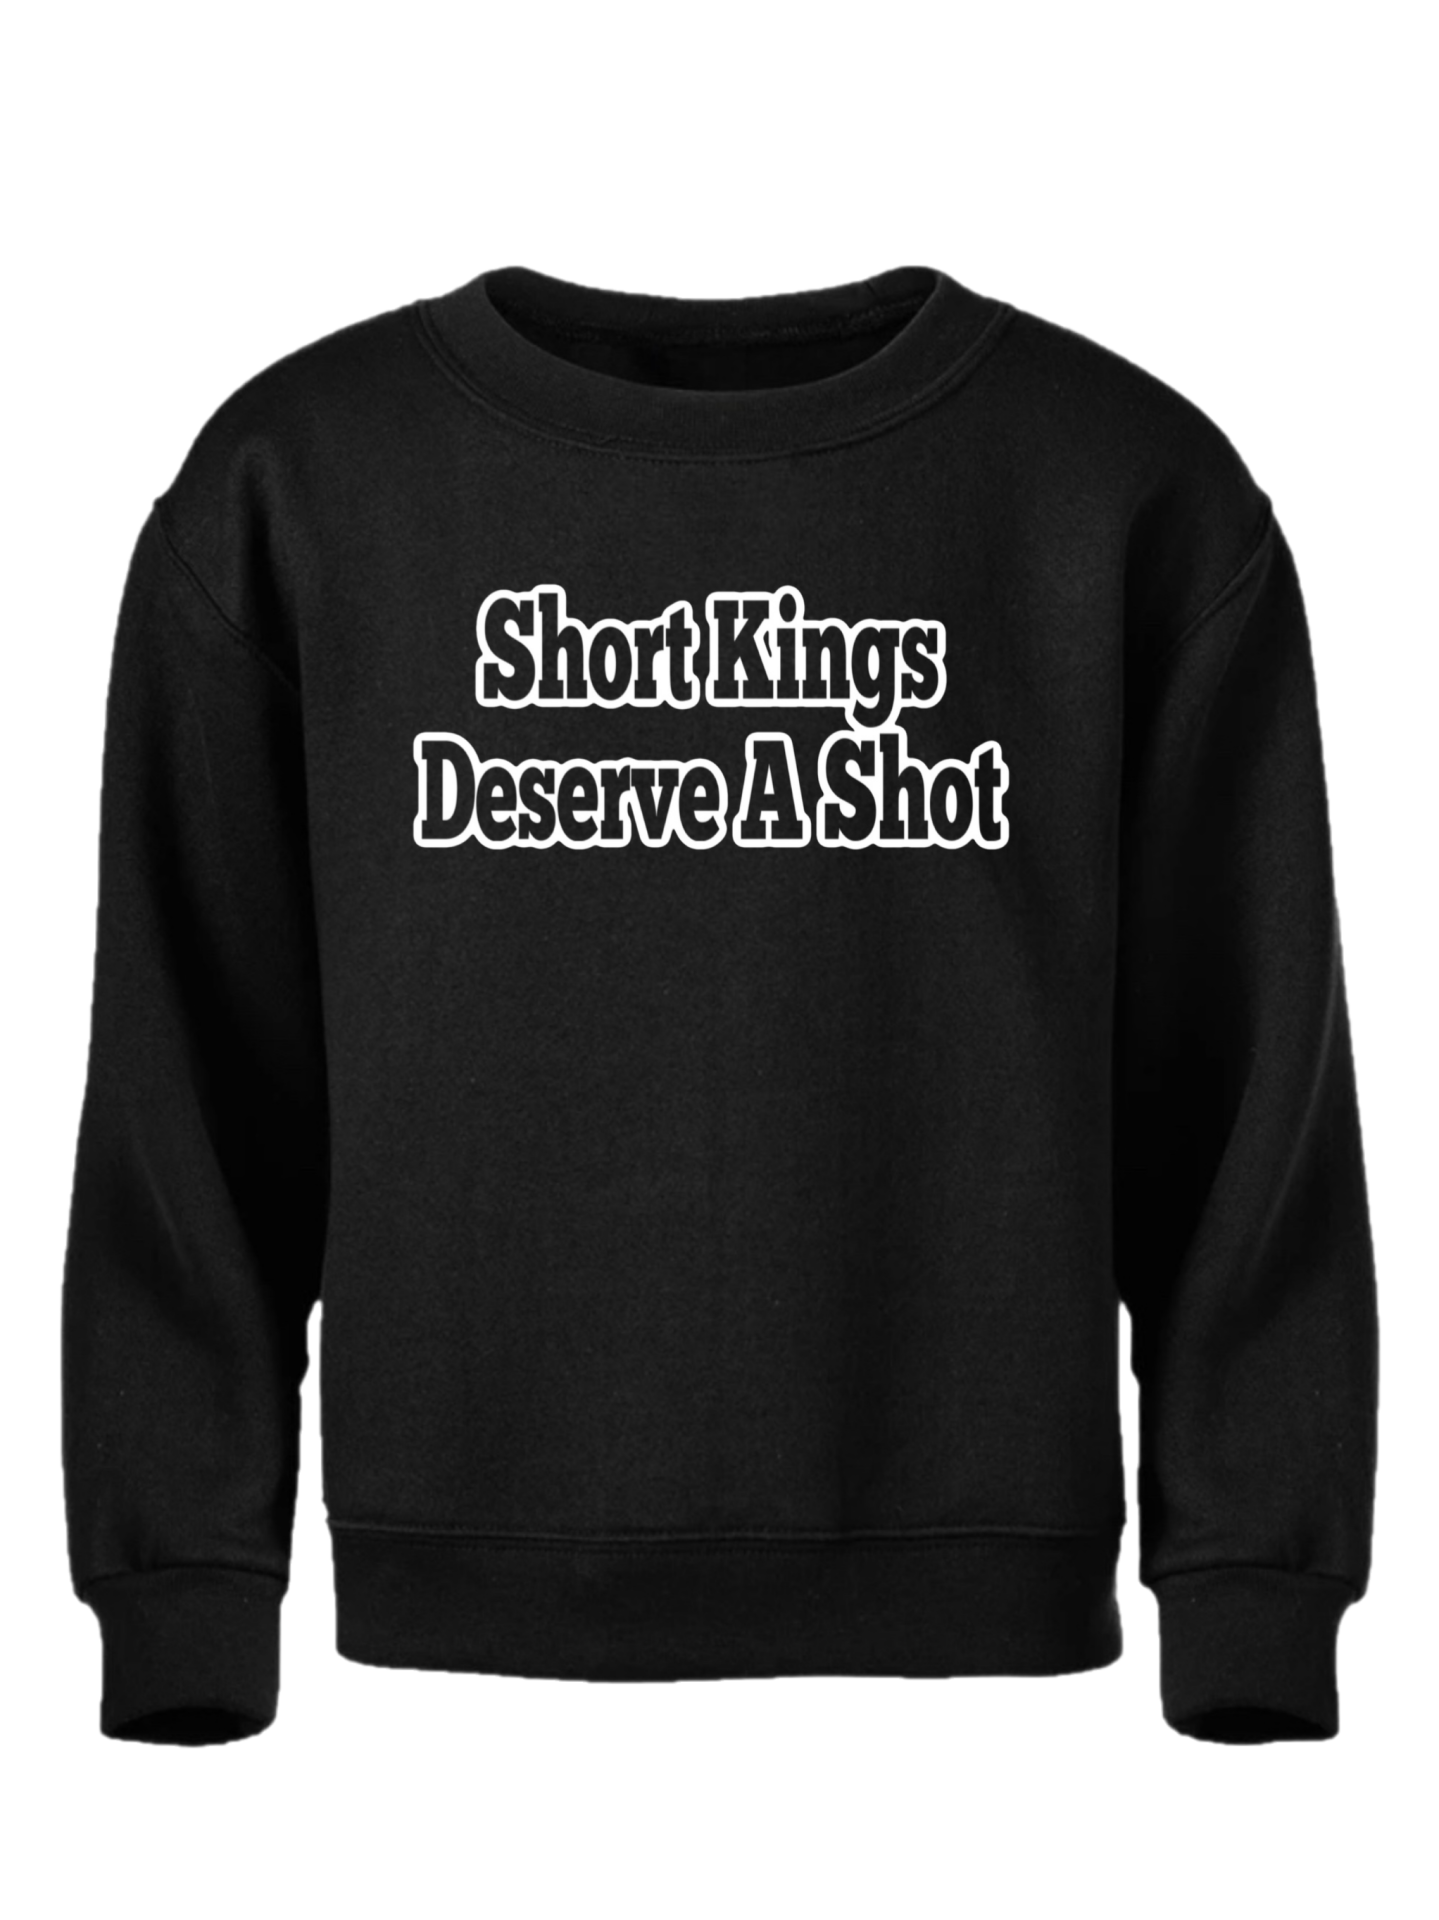 "Short kings deserve a shot" Israel Padilla sweatshirt in black color